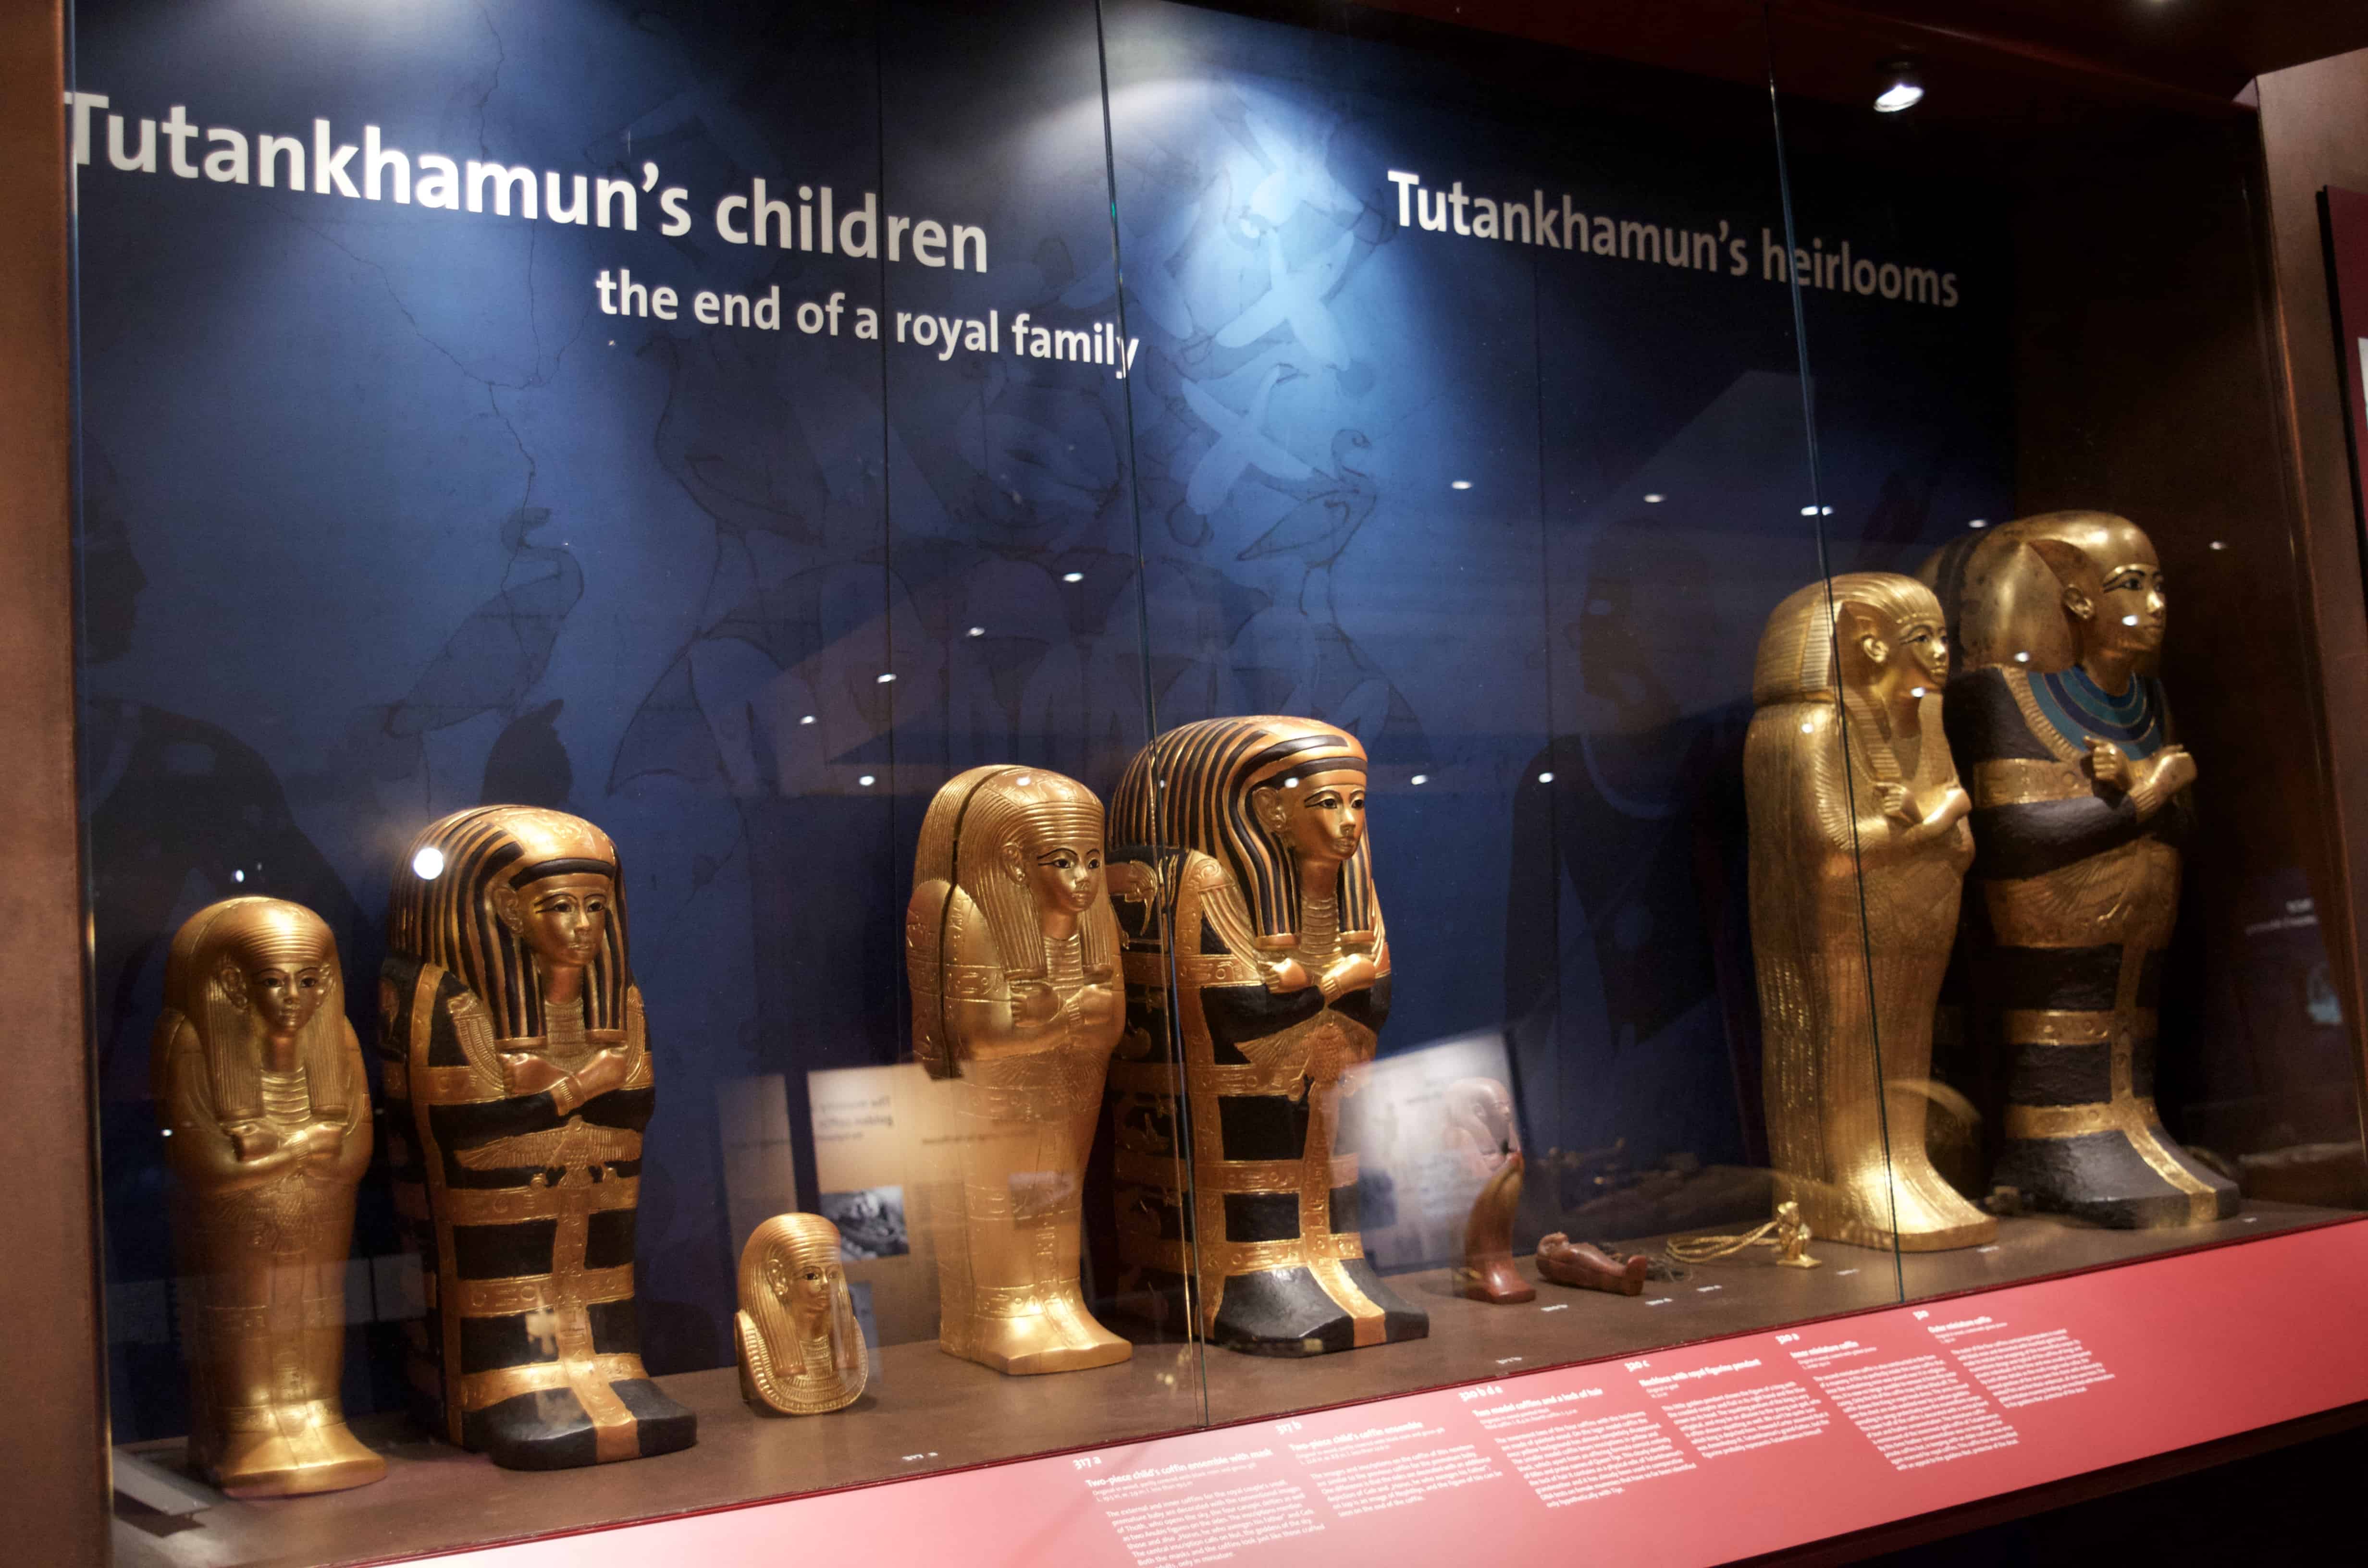 The Stunning King Tut Exhibit at the Putnam Museum